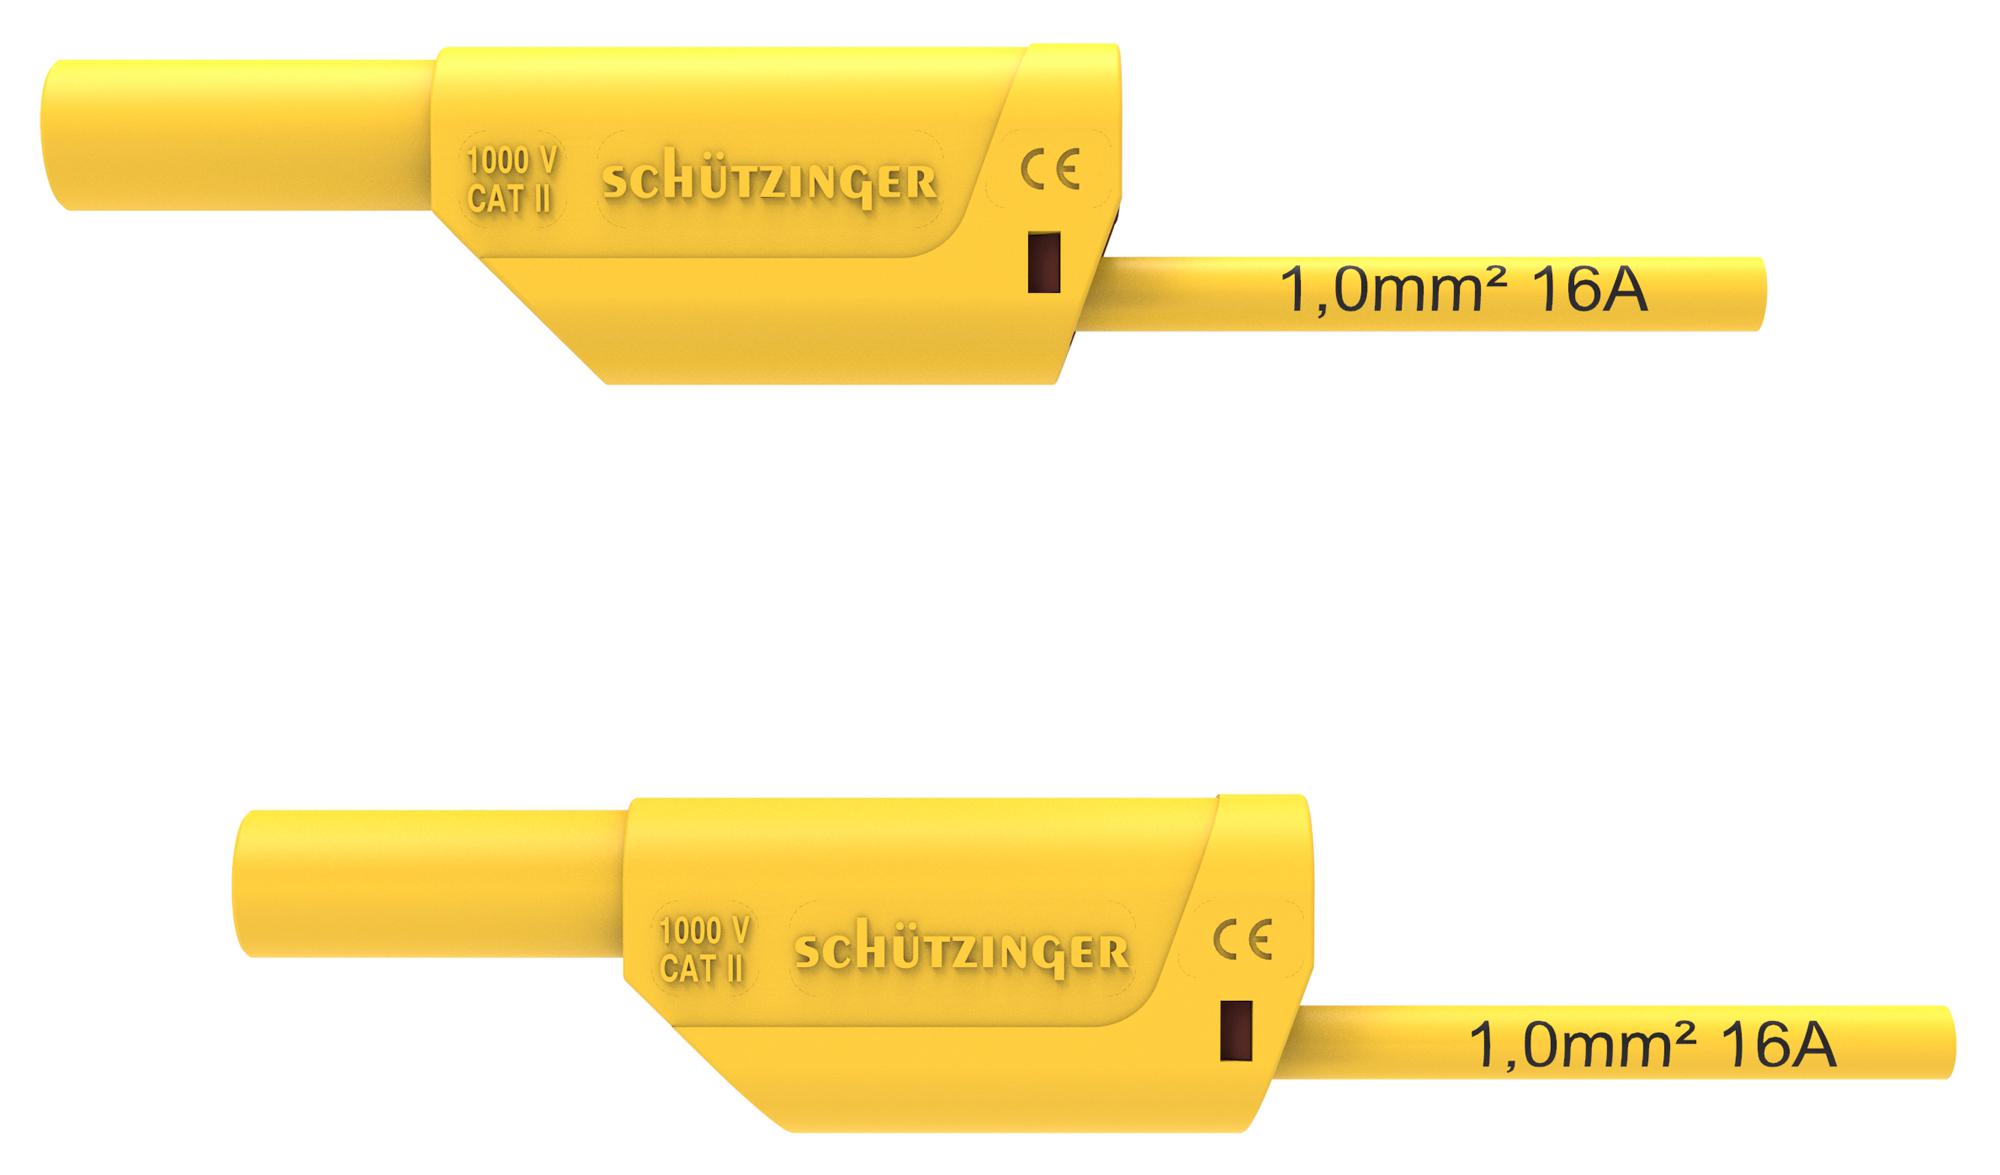 Schutzinger Di Vsfk 8500 / 1 / 50 / Ge 4mm Banana Plug-Sq, Shrouded, Y, 500mm